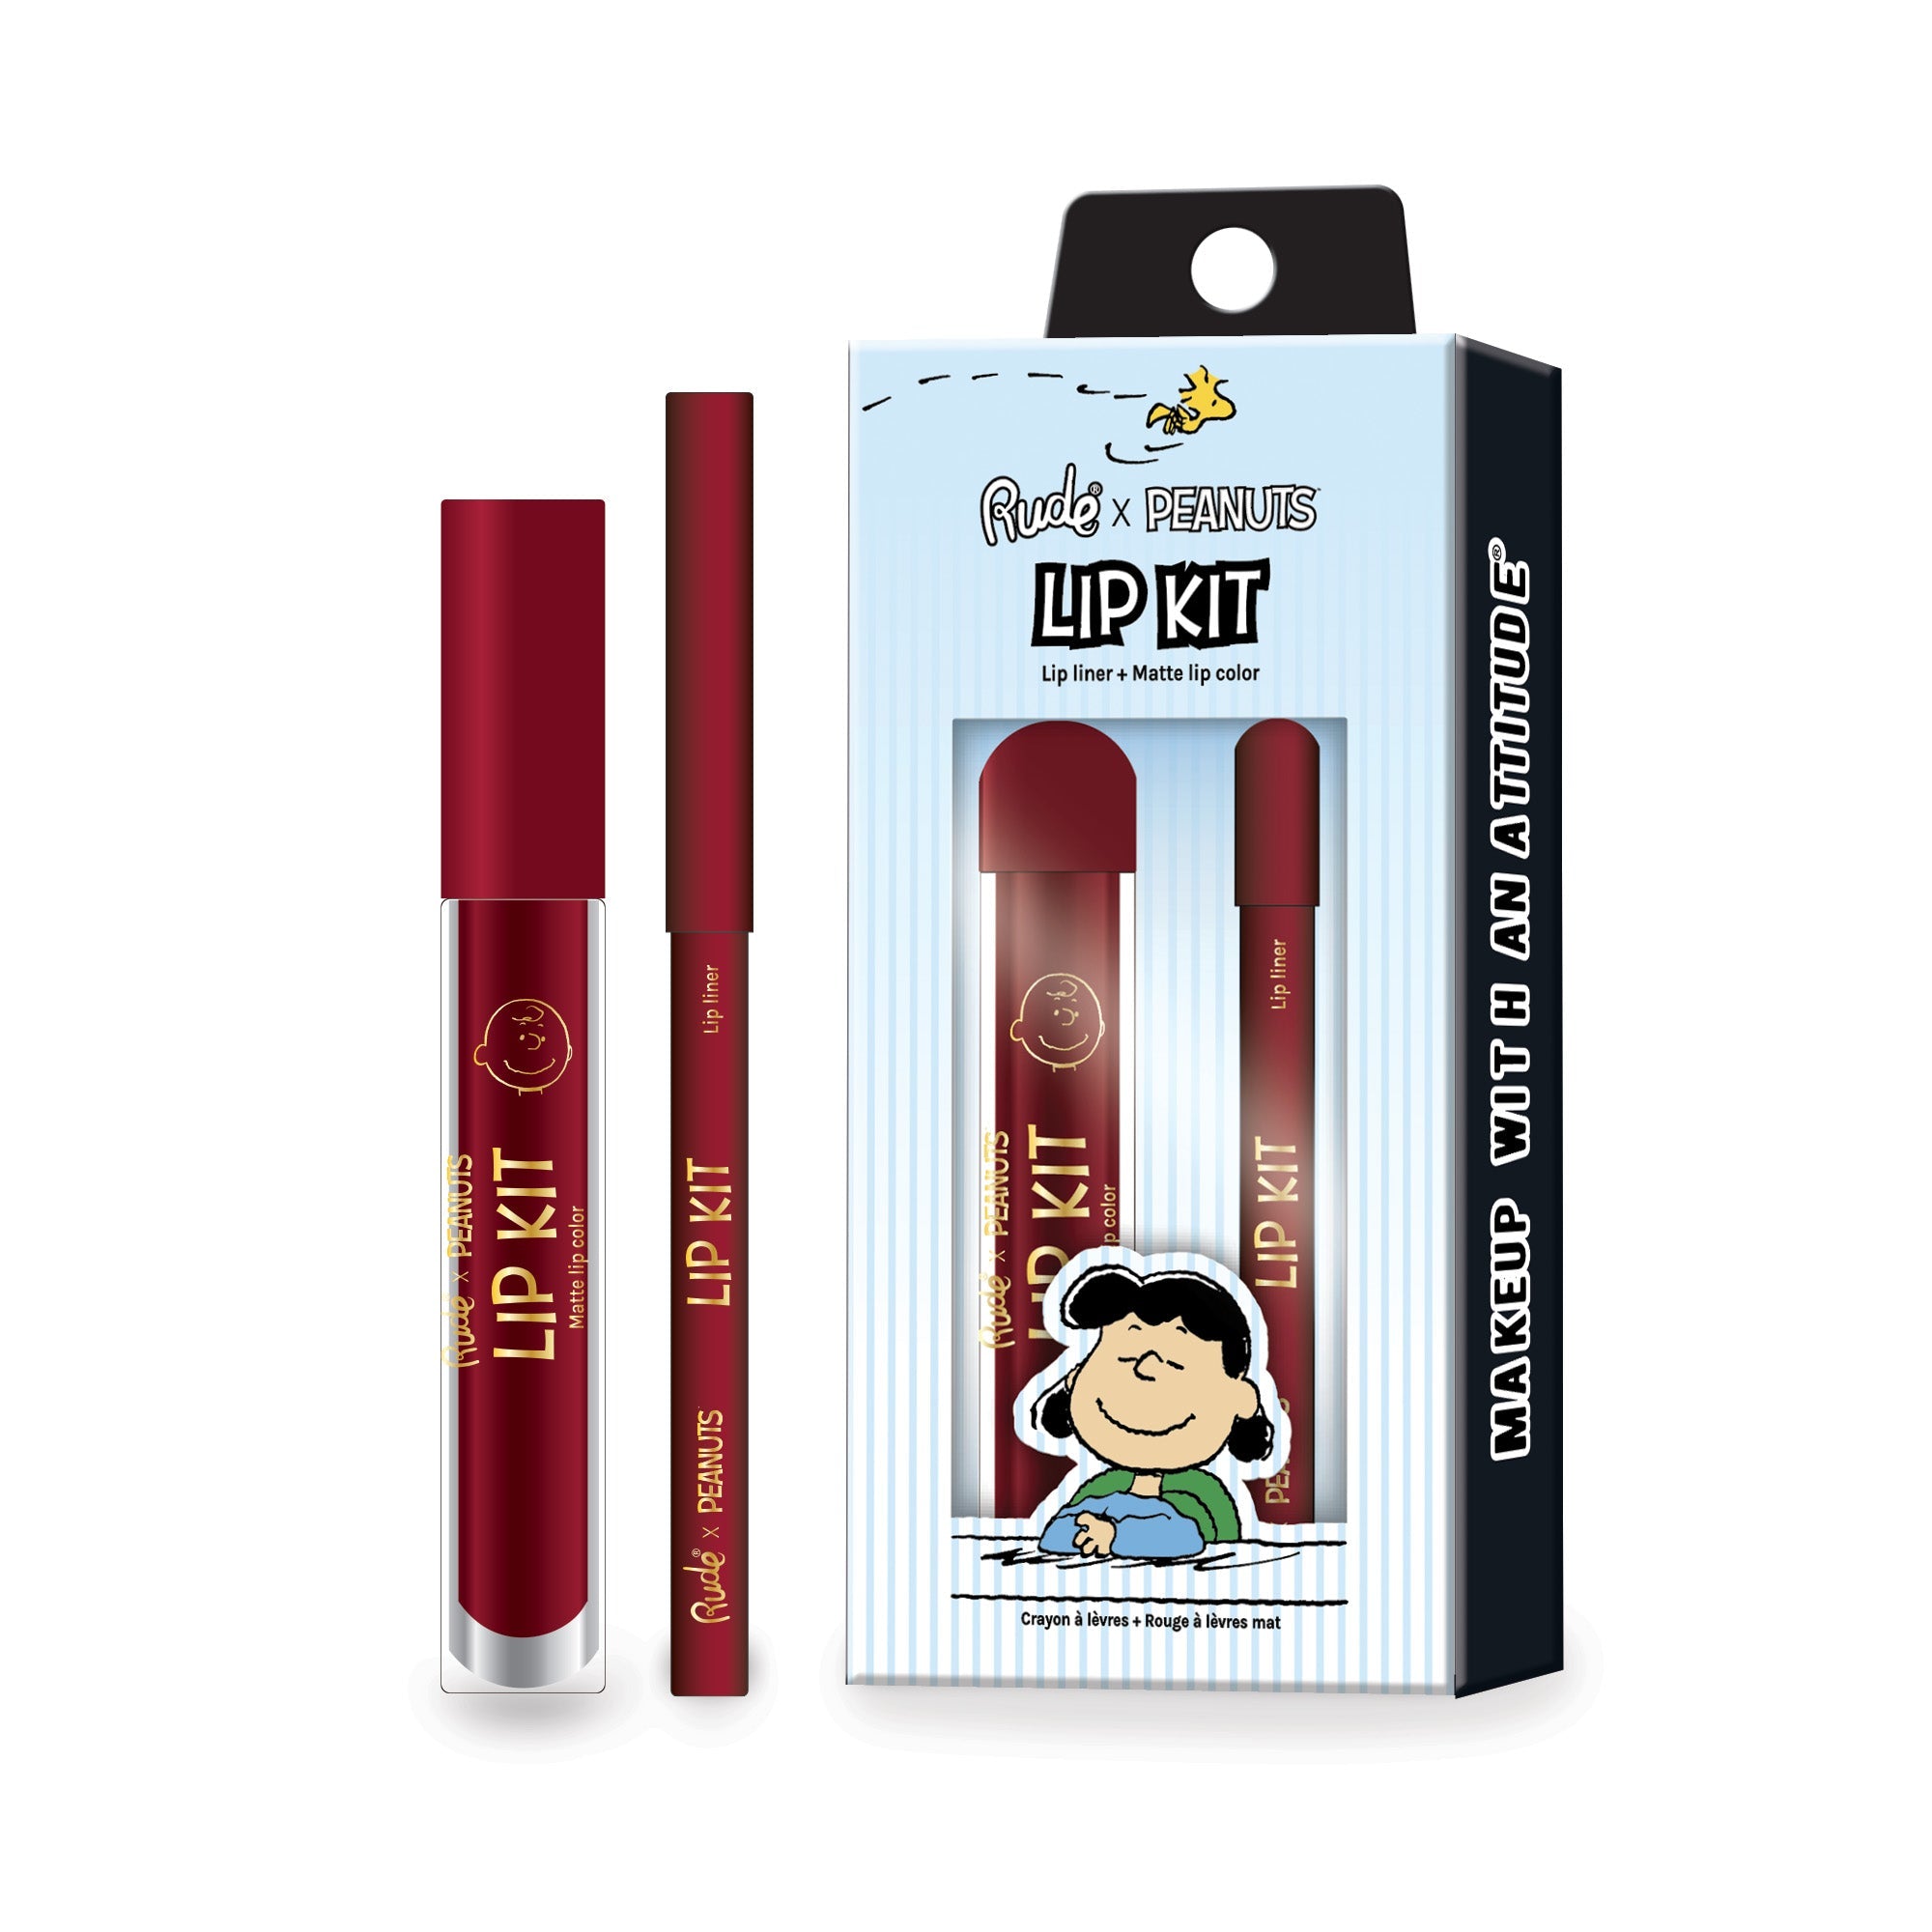 RUDE Peanuts Lip Kit - Lip Liner + Matte Lip Color